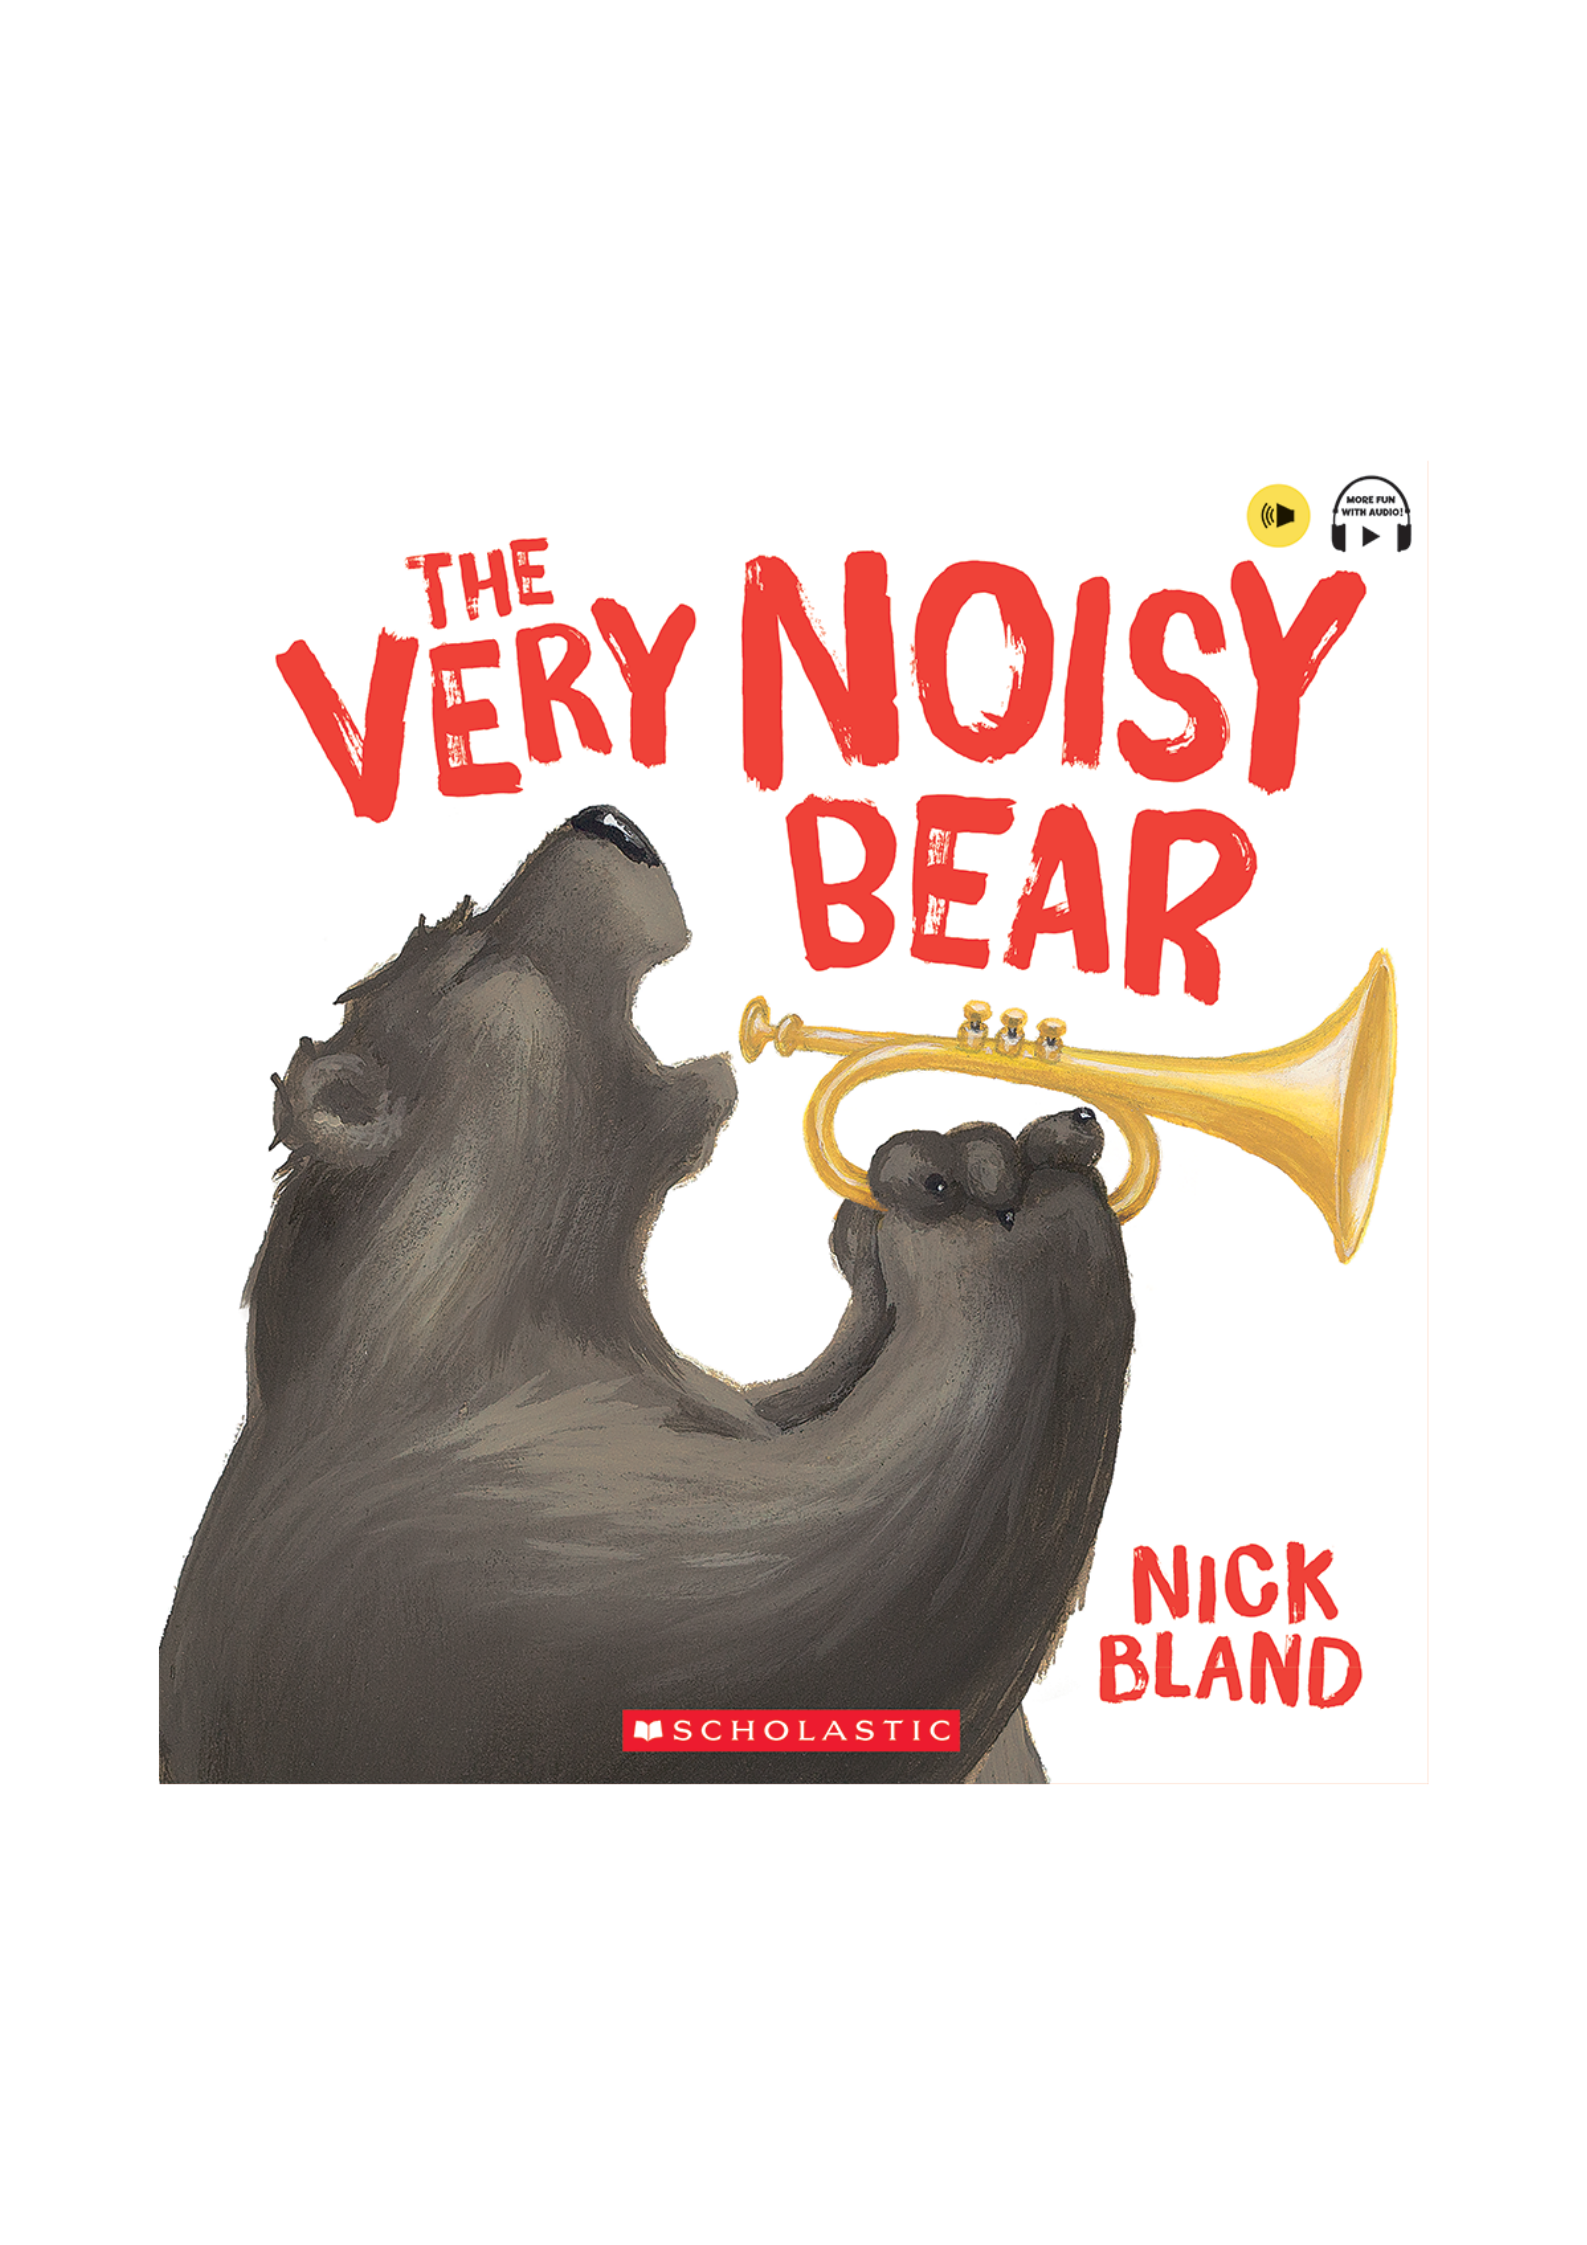 The Very Noisy Bear (Scholastic Picture Book Garden 2)